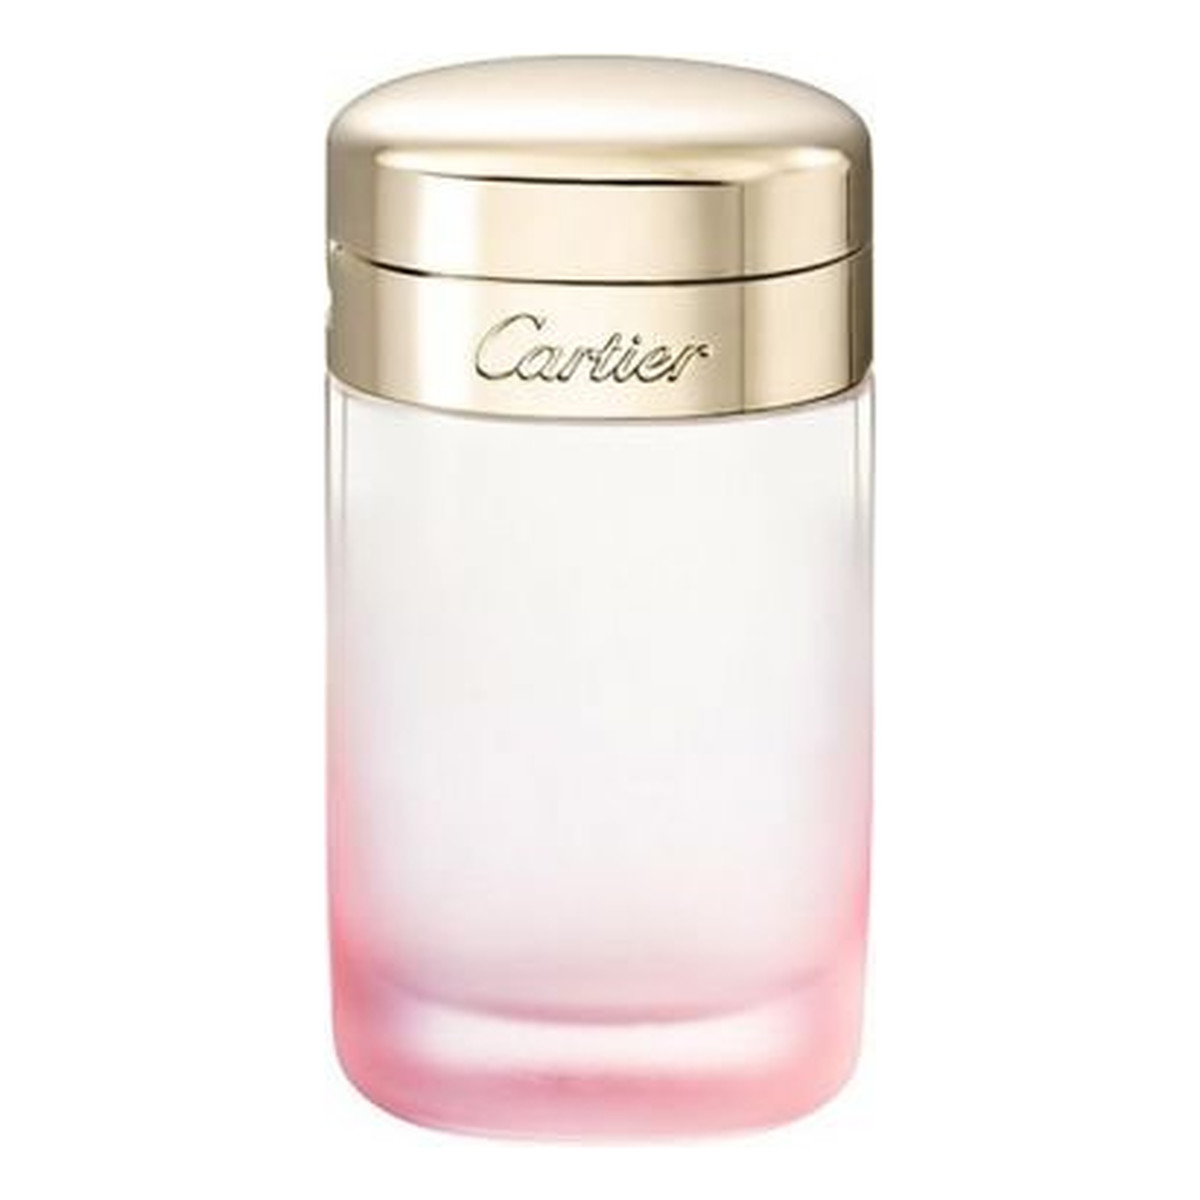 Cartier Baiser Vole Fraiche woda perfumowana spray 50ml